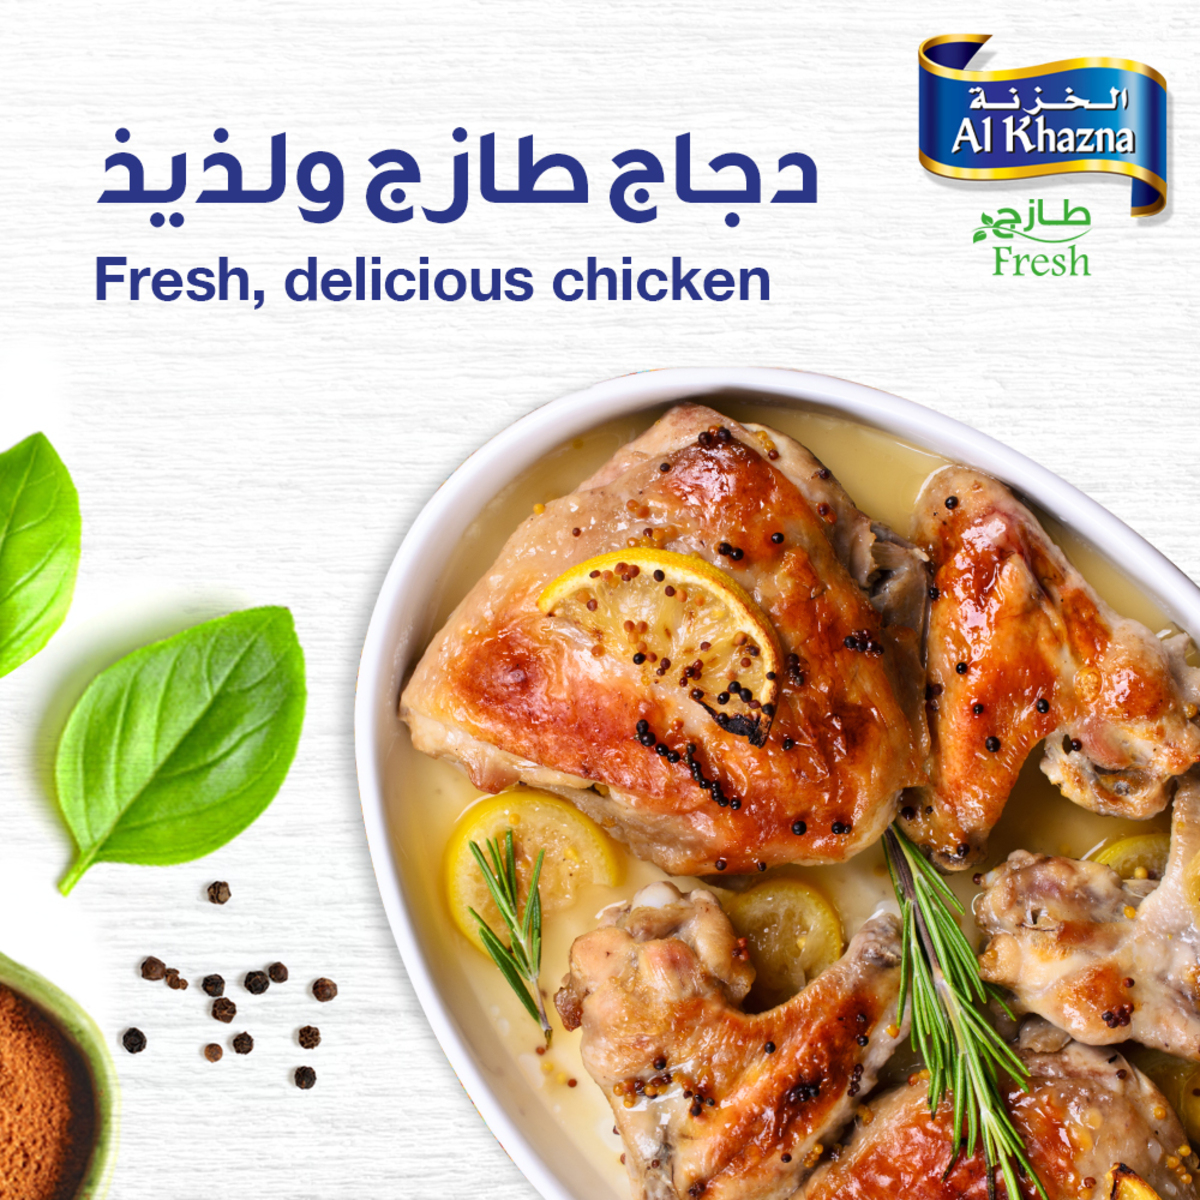 Al Khazna Fresh Chicken Mix Parts 1 kg